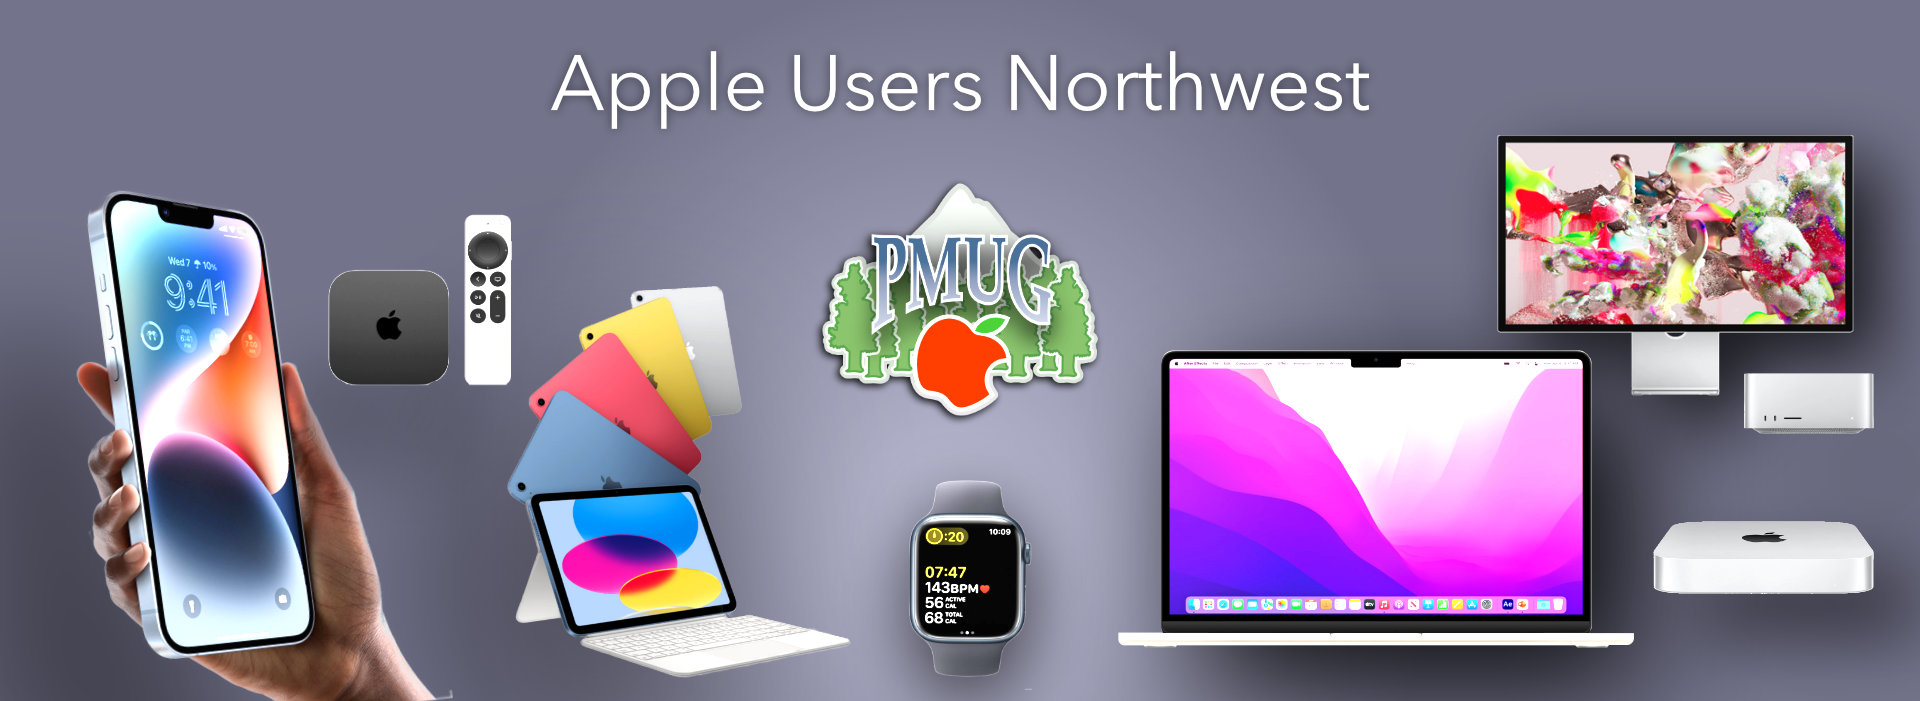 Apple Users Northwest header, showing iPhone, Apple Watch, Apple TV, Mac book pro, Mac mini, Mac Studio and the Studio Display